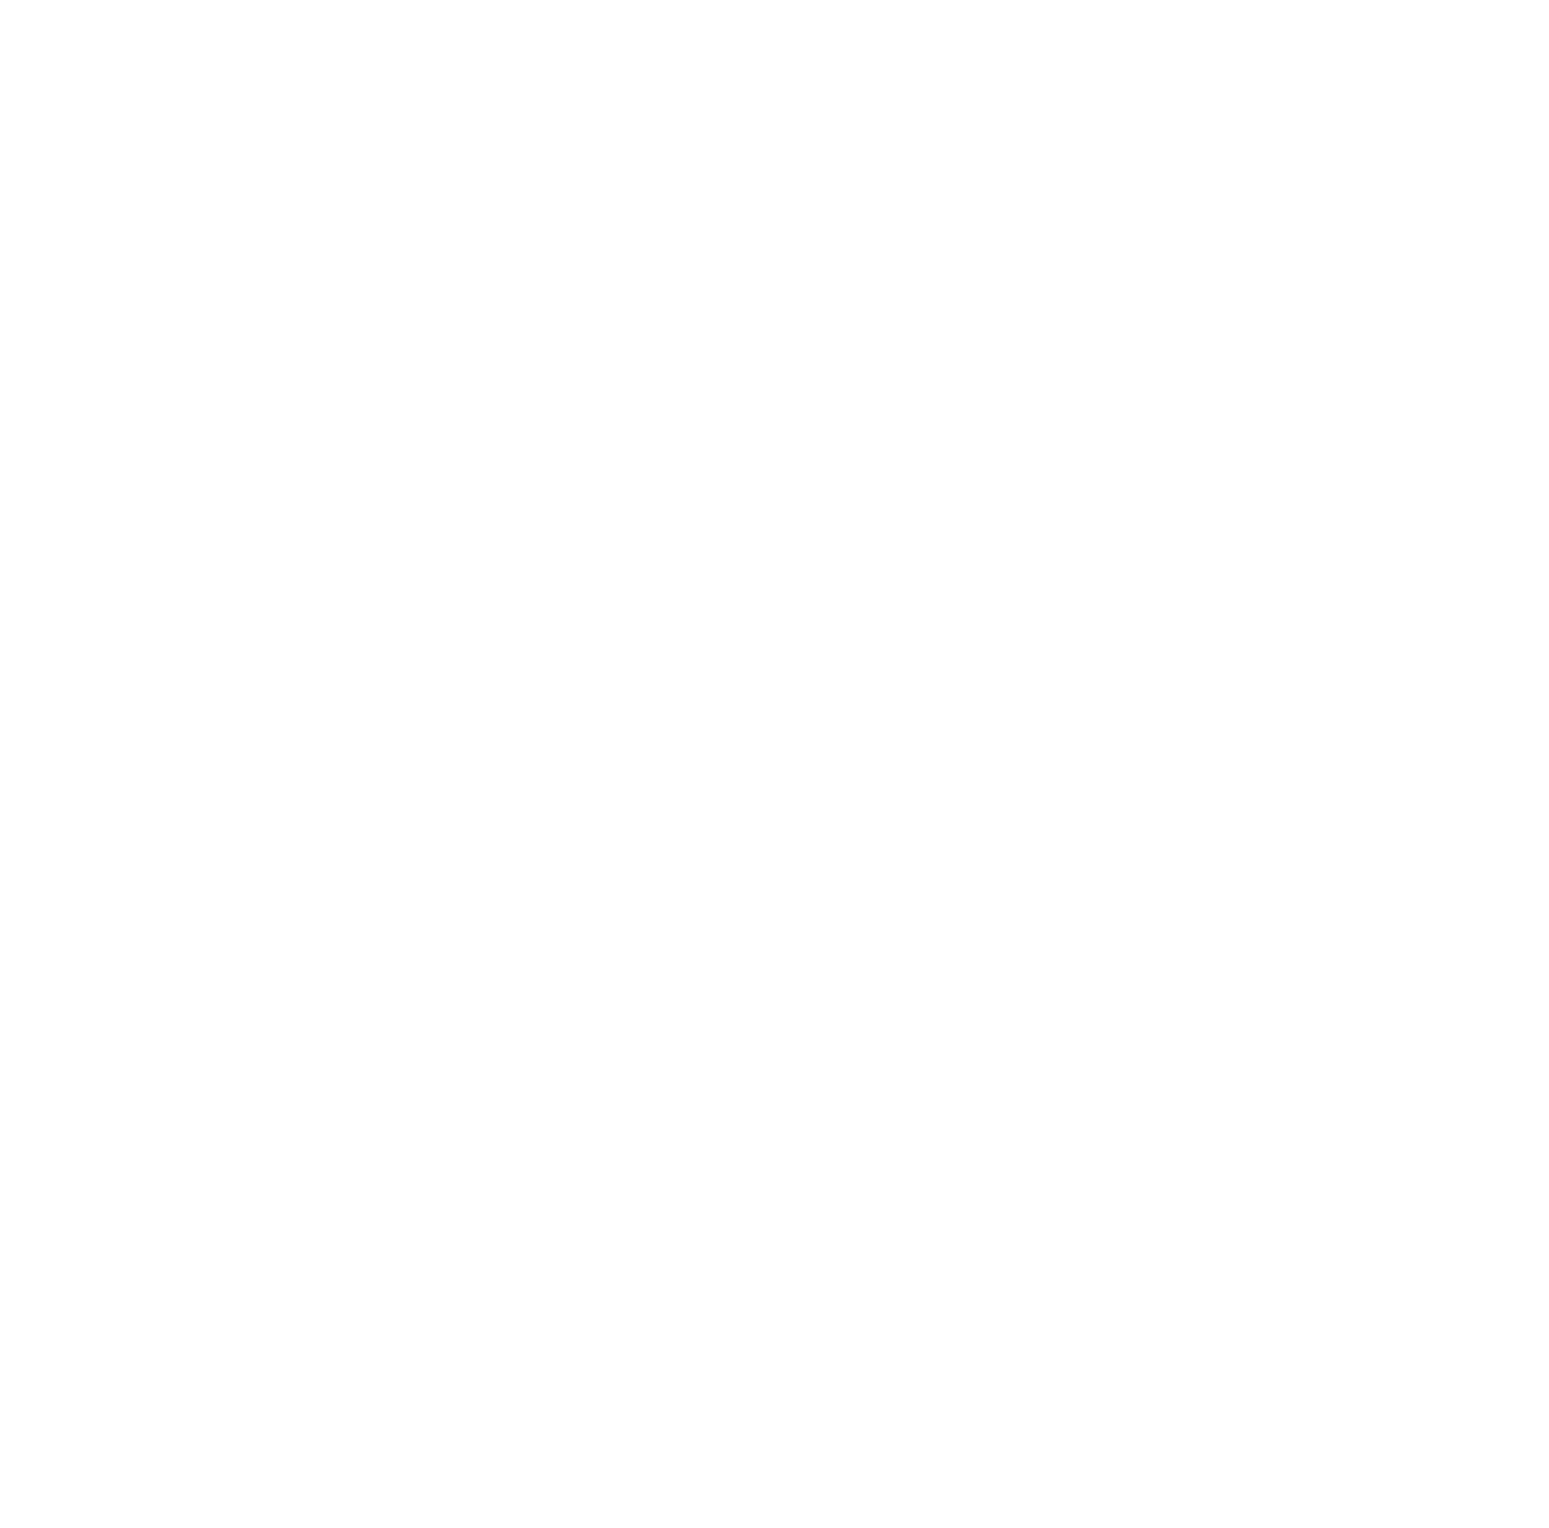 Verano Holdings logo for dark backgrounds (transparent PNG)